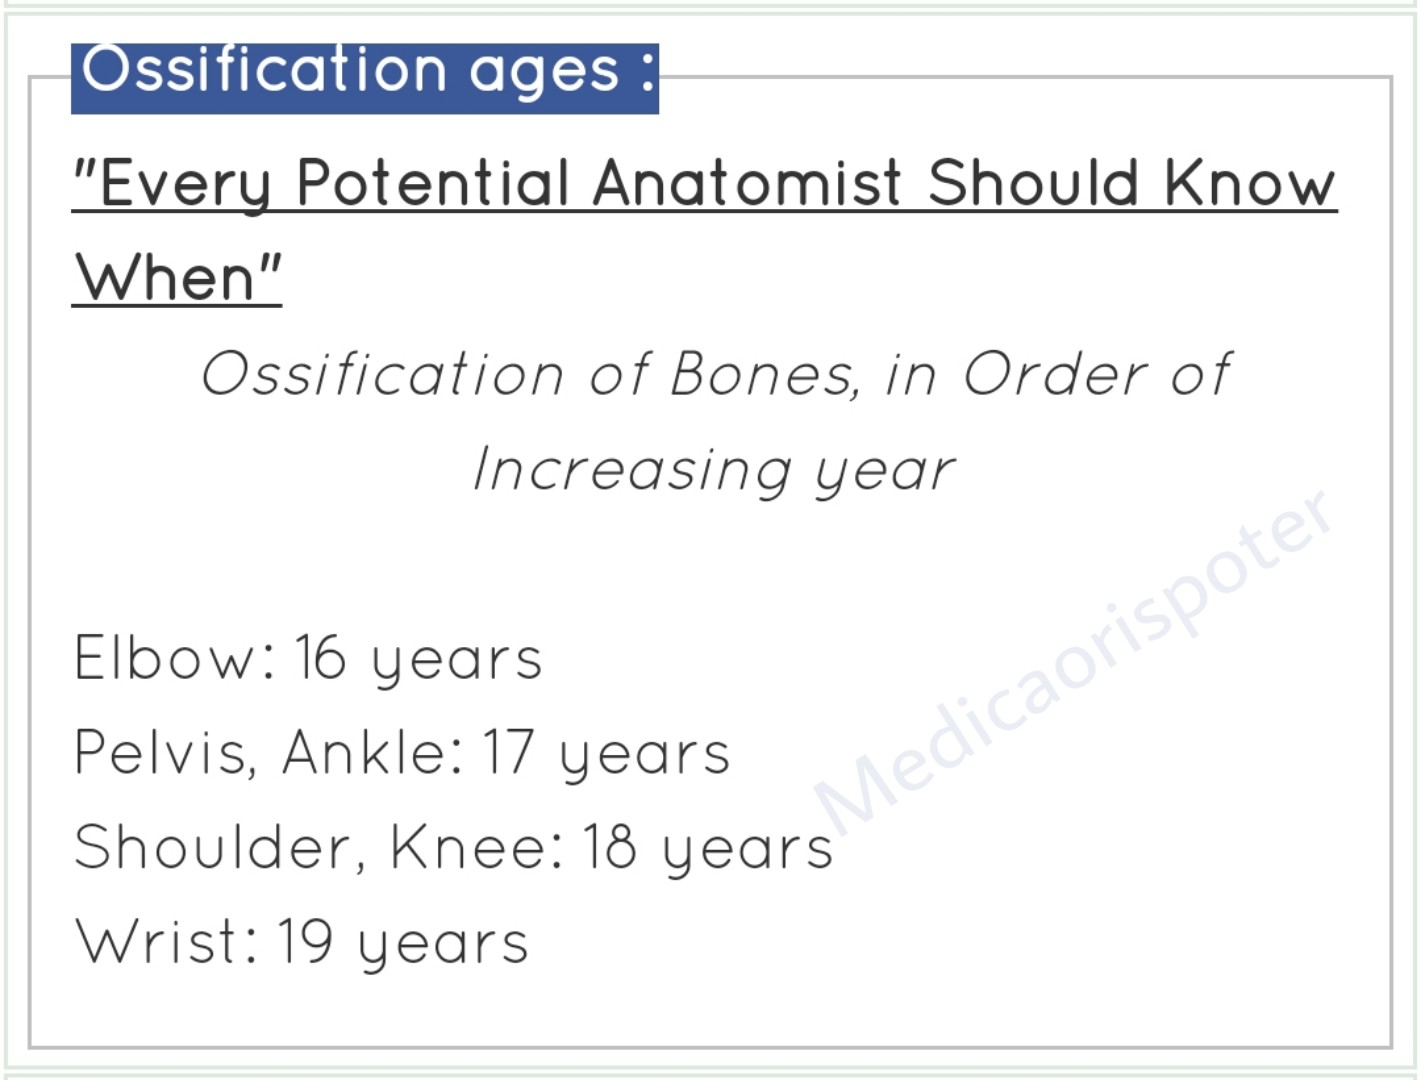 Ossification time for Upper Limb Bones